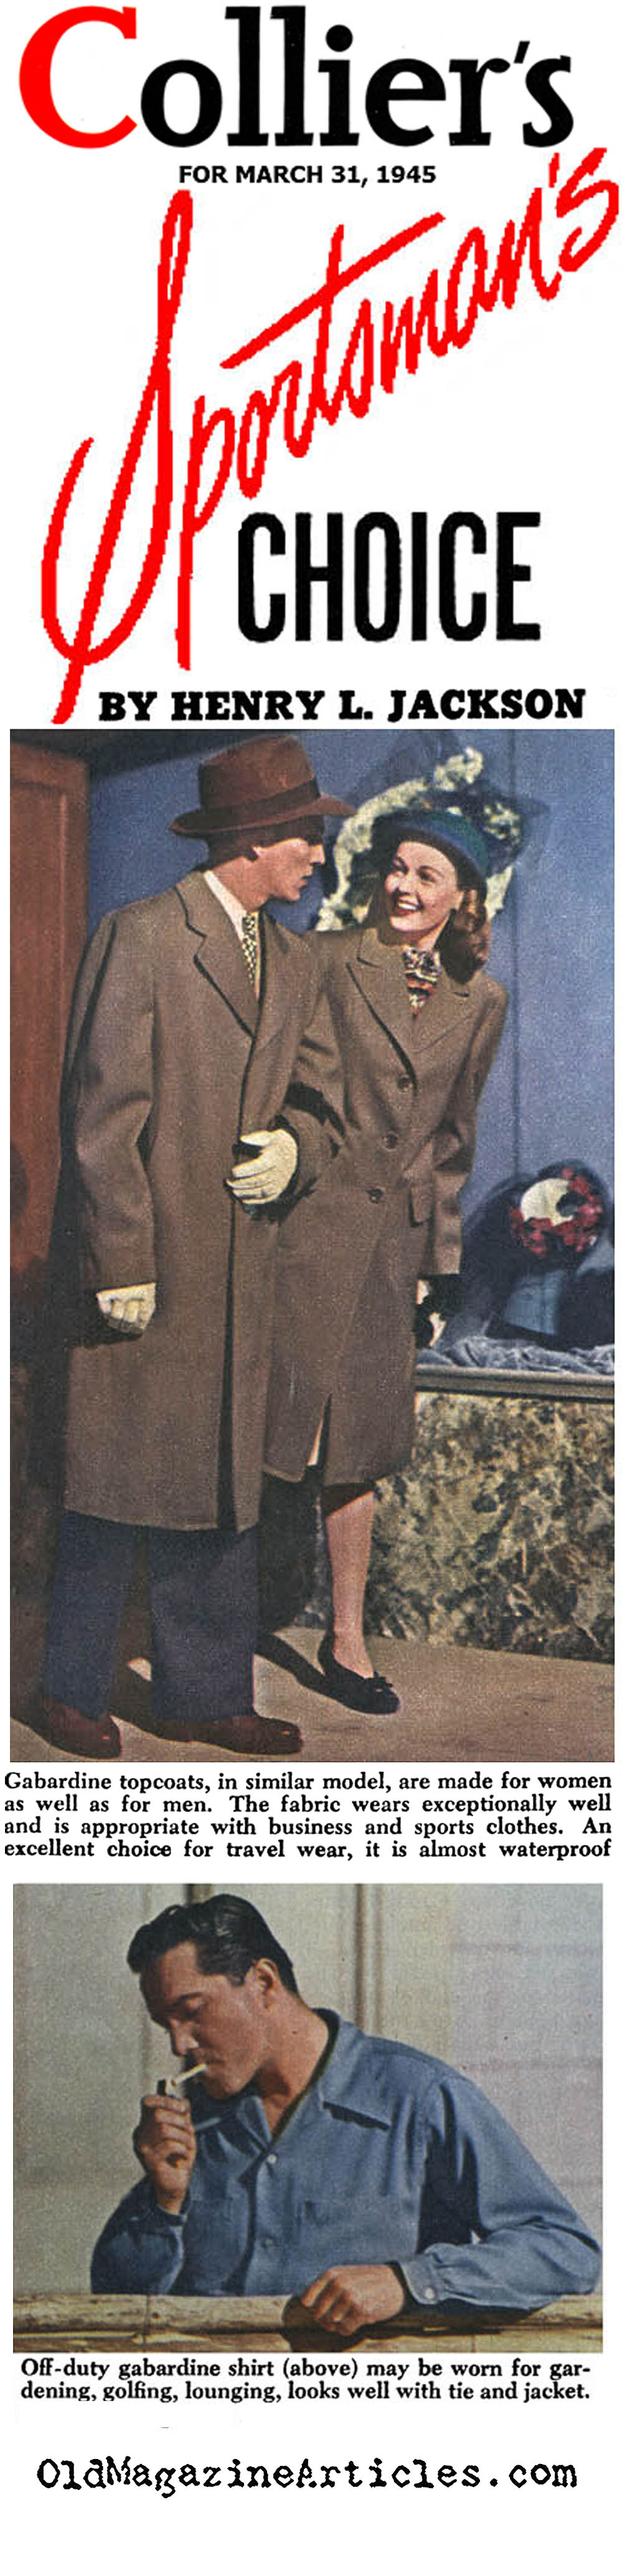 1940's Sportswear for Men (Collier's Magazine, 1945)